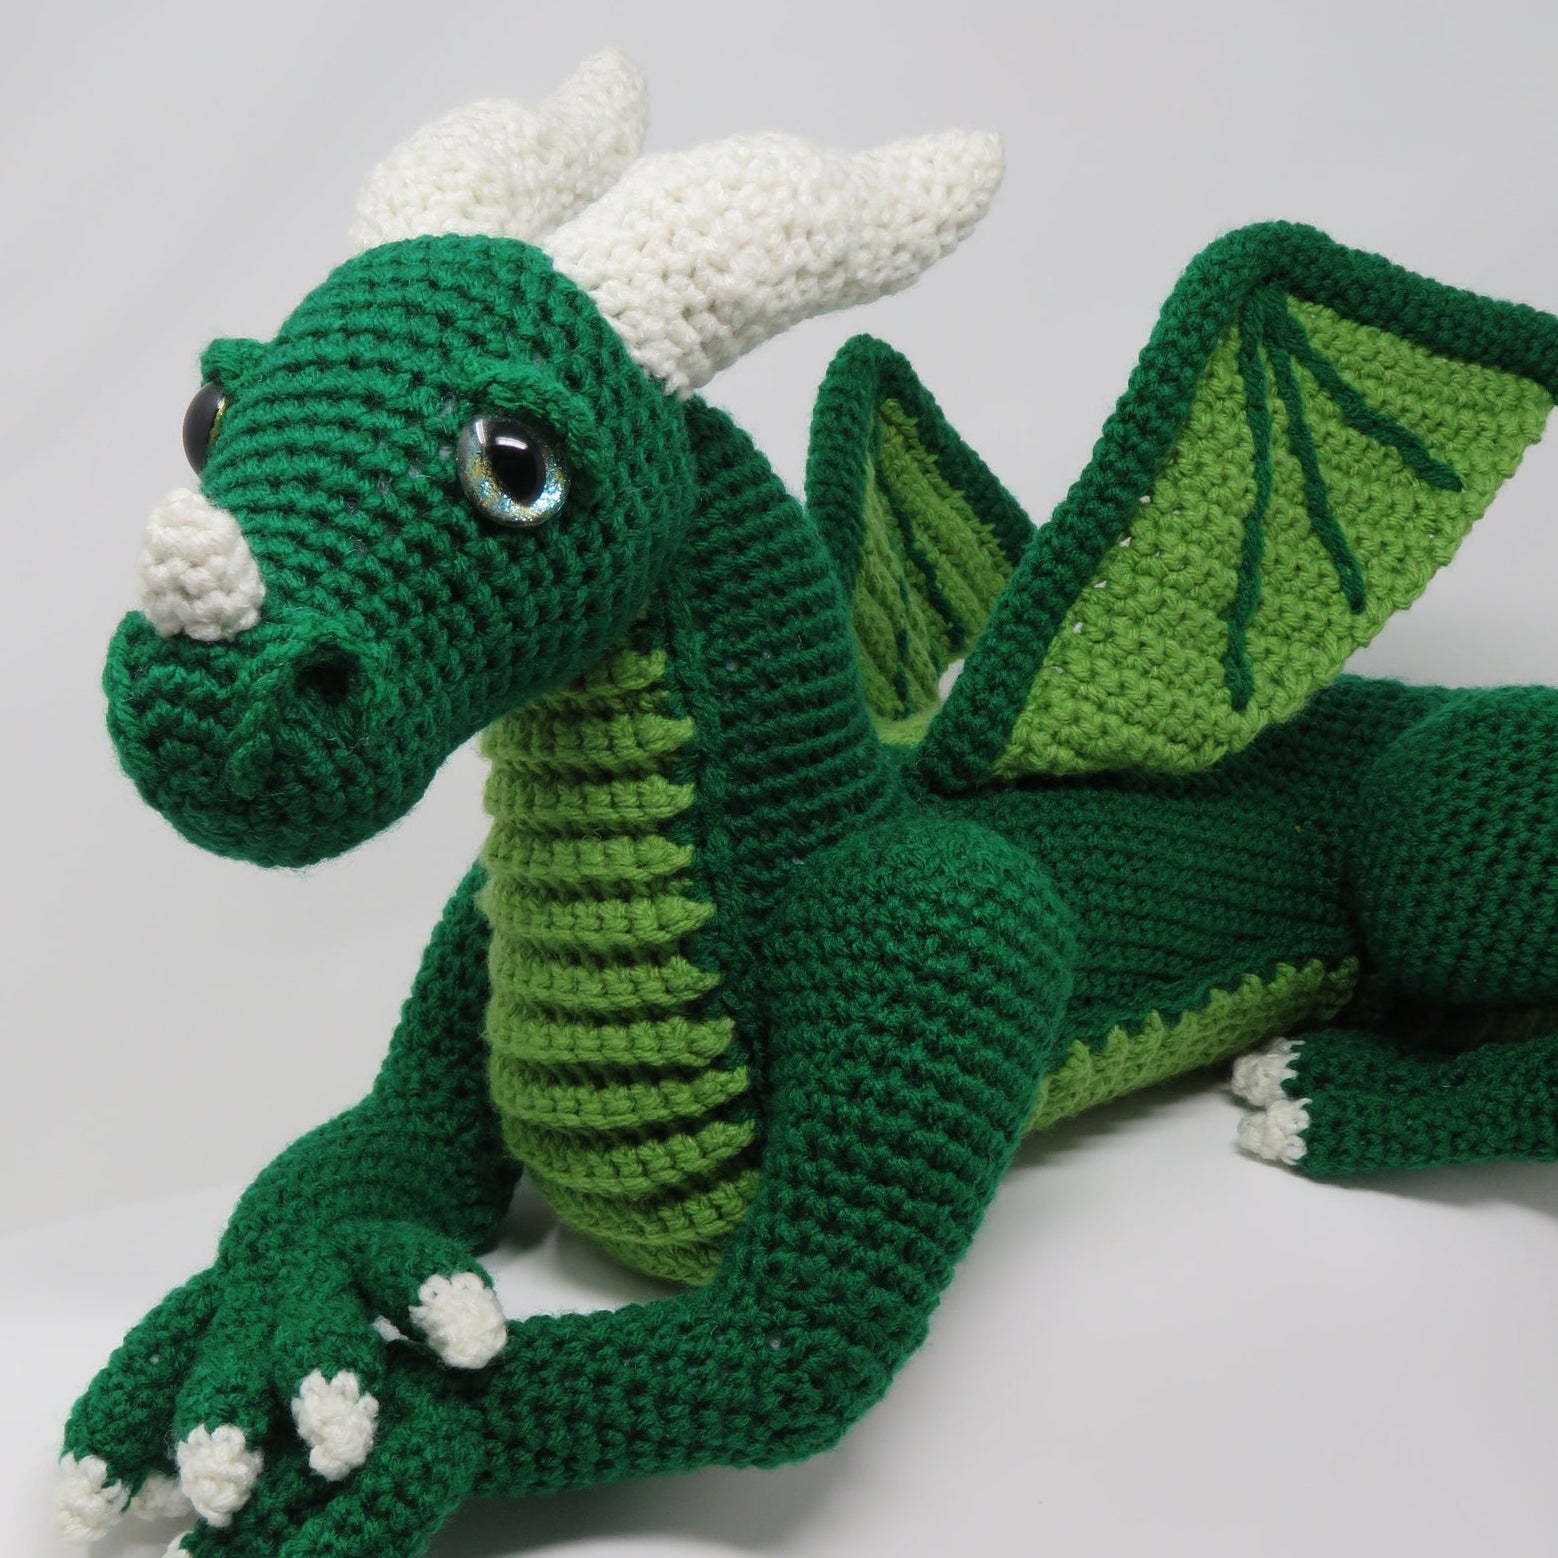 Emotional Support Dragon: Crochet pattern